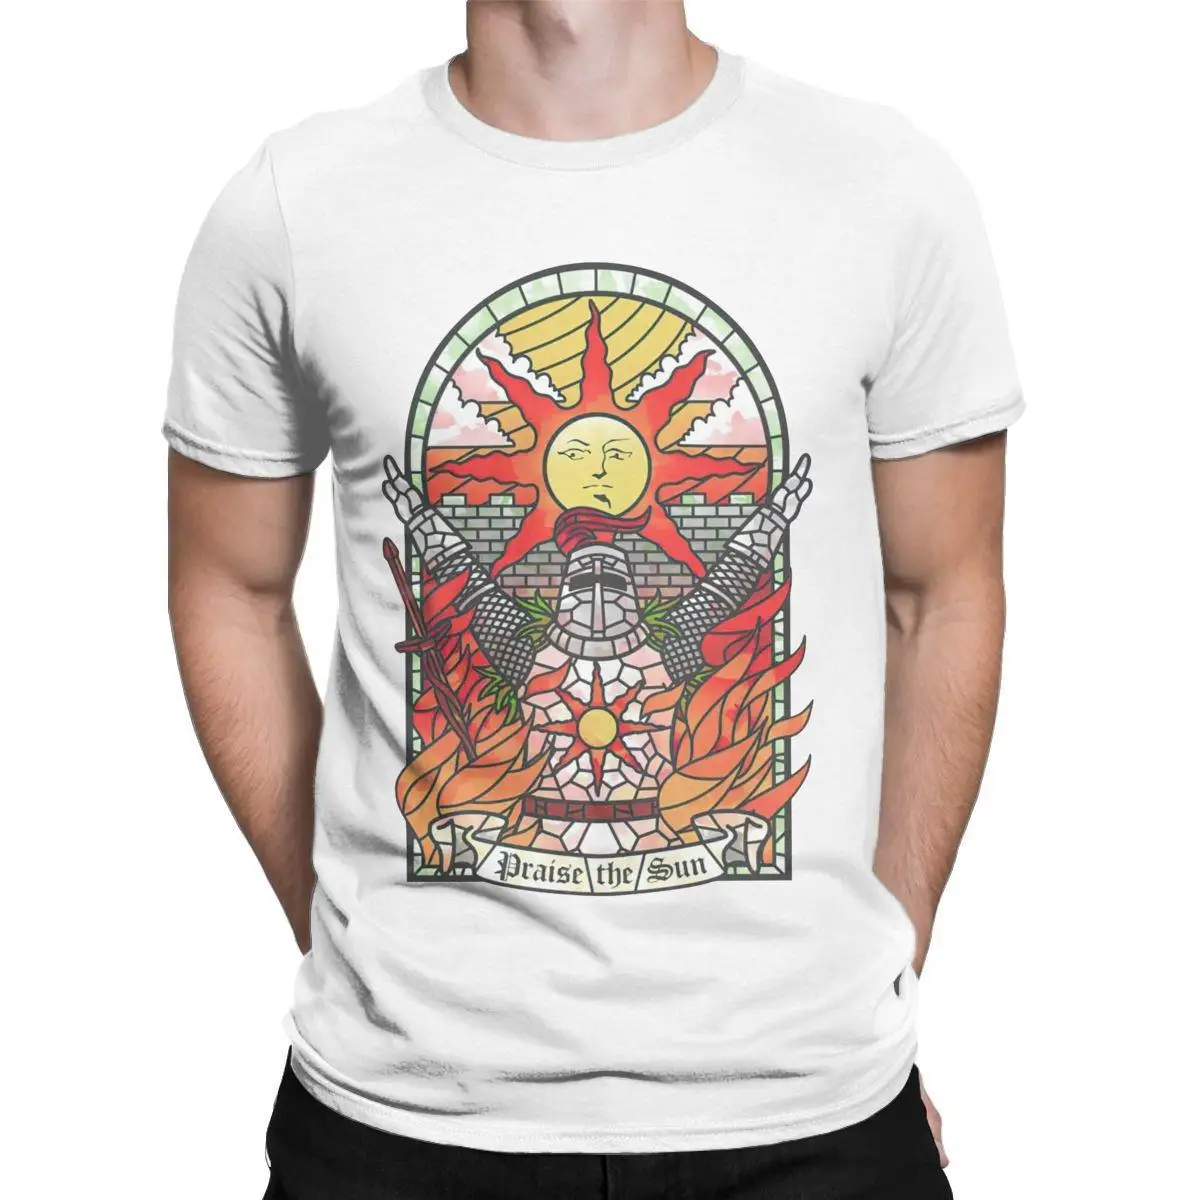 Dark Soul Praise The Sun T-Shirt for Men Novelty Cotton Tee Shirt O Neck Short Sleeve T Shirts Gift Clothes